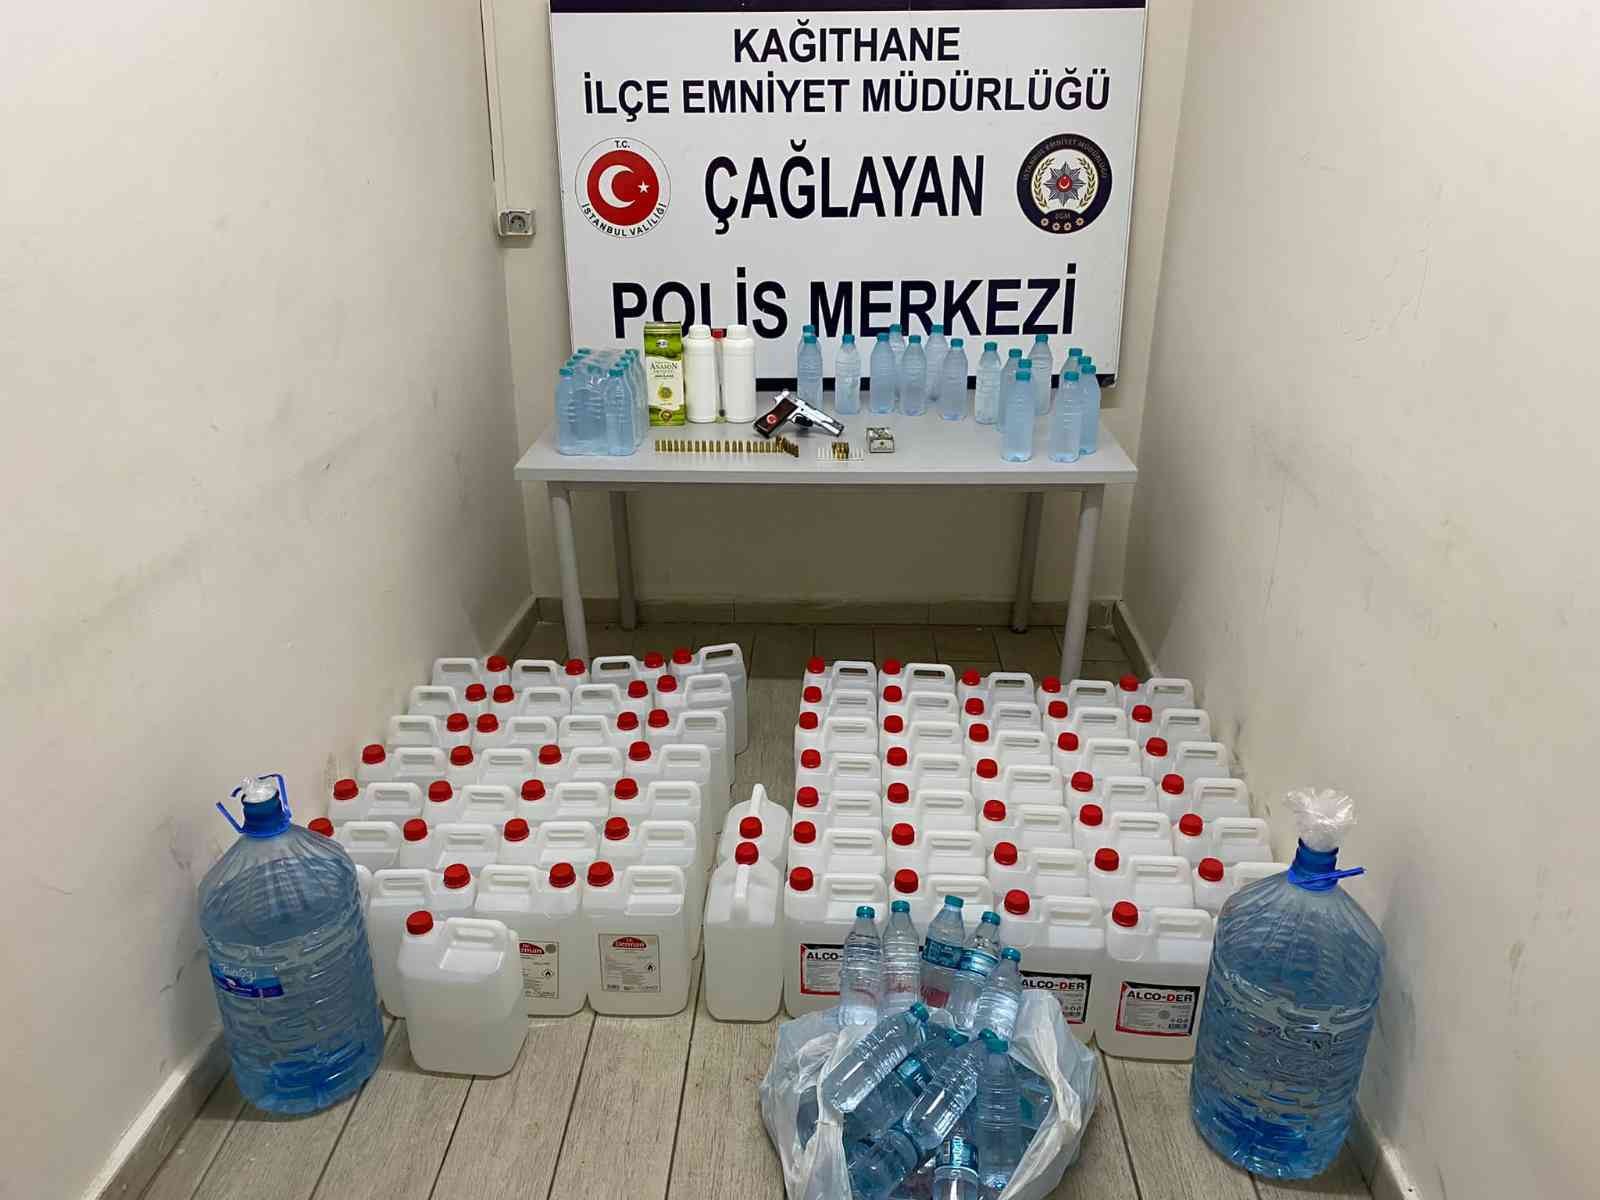 İstanbul’da 400 litre sahte alkol ele geçirildi #istanbul